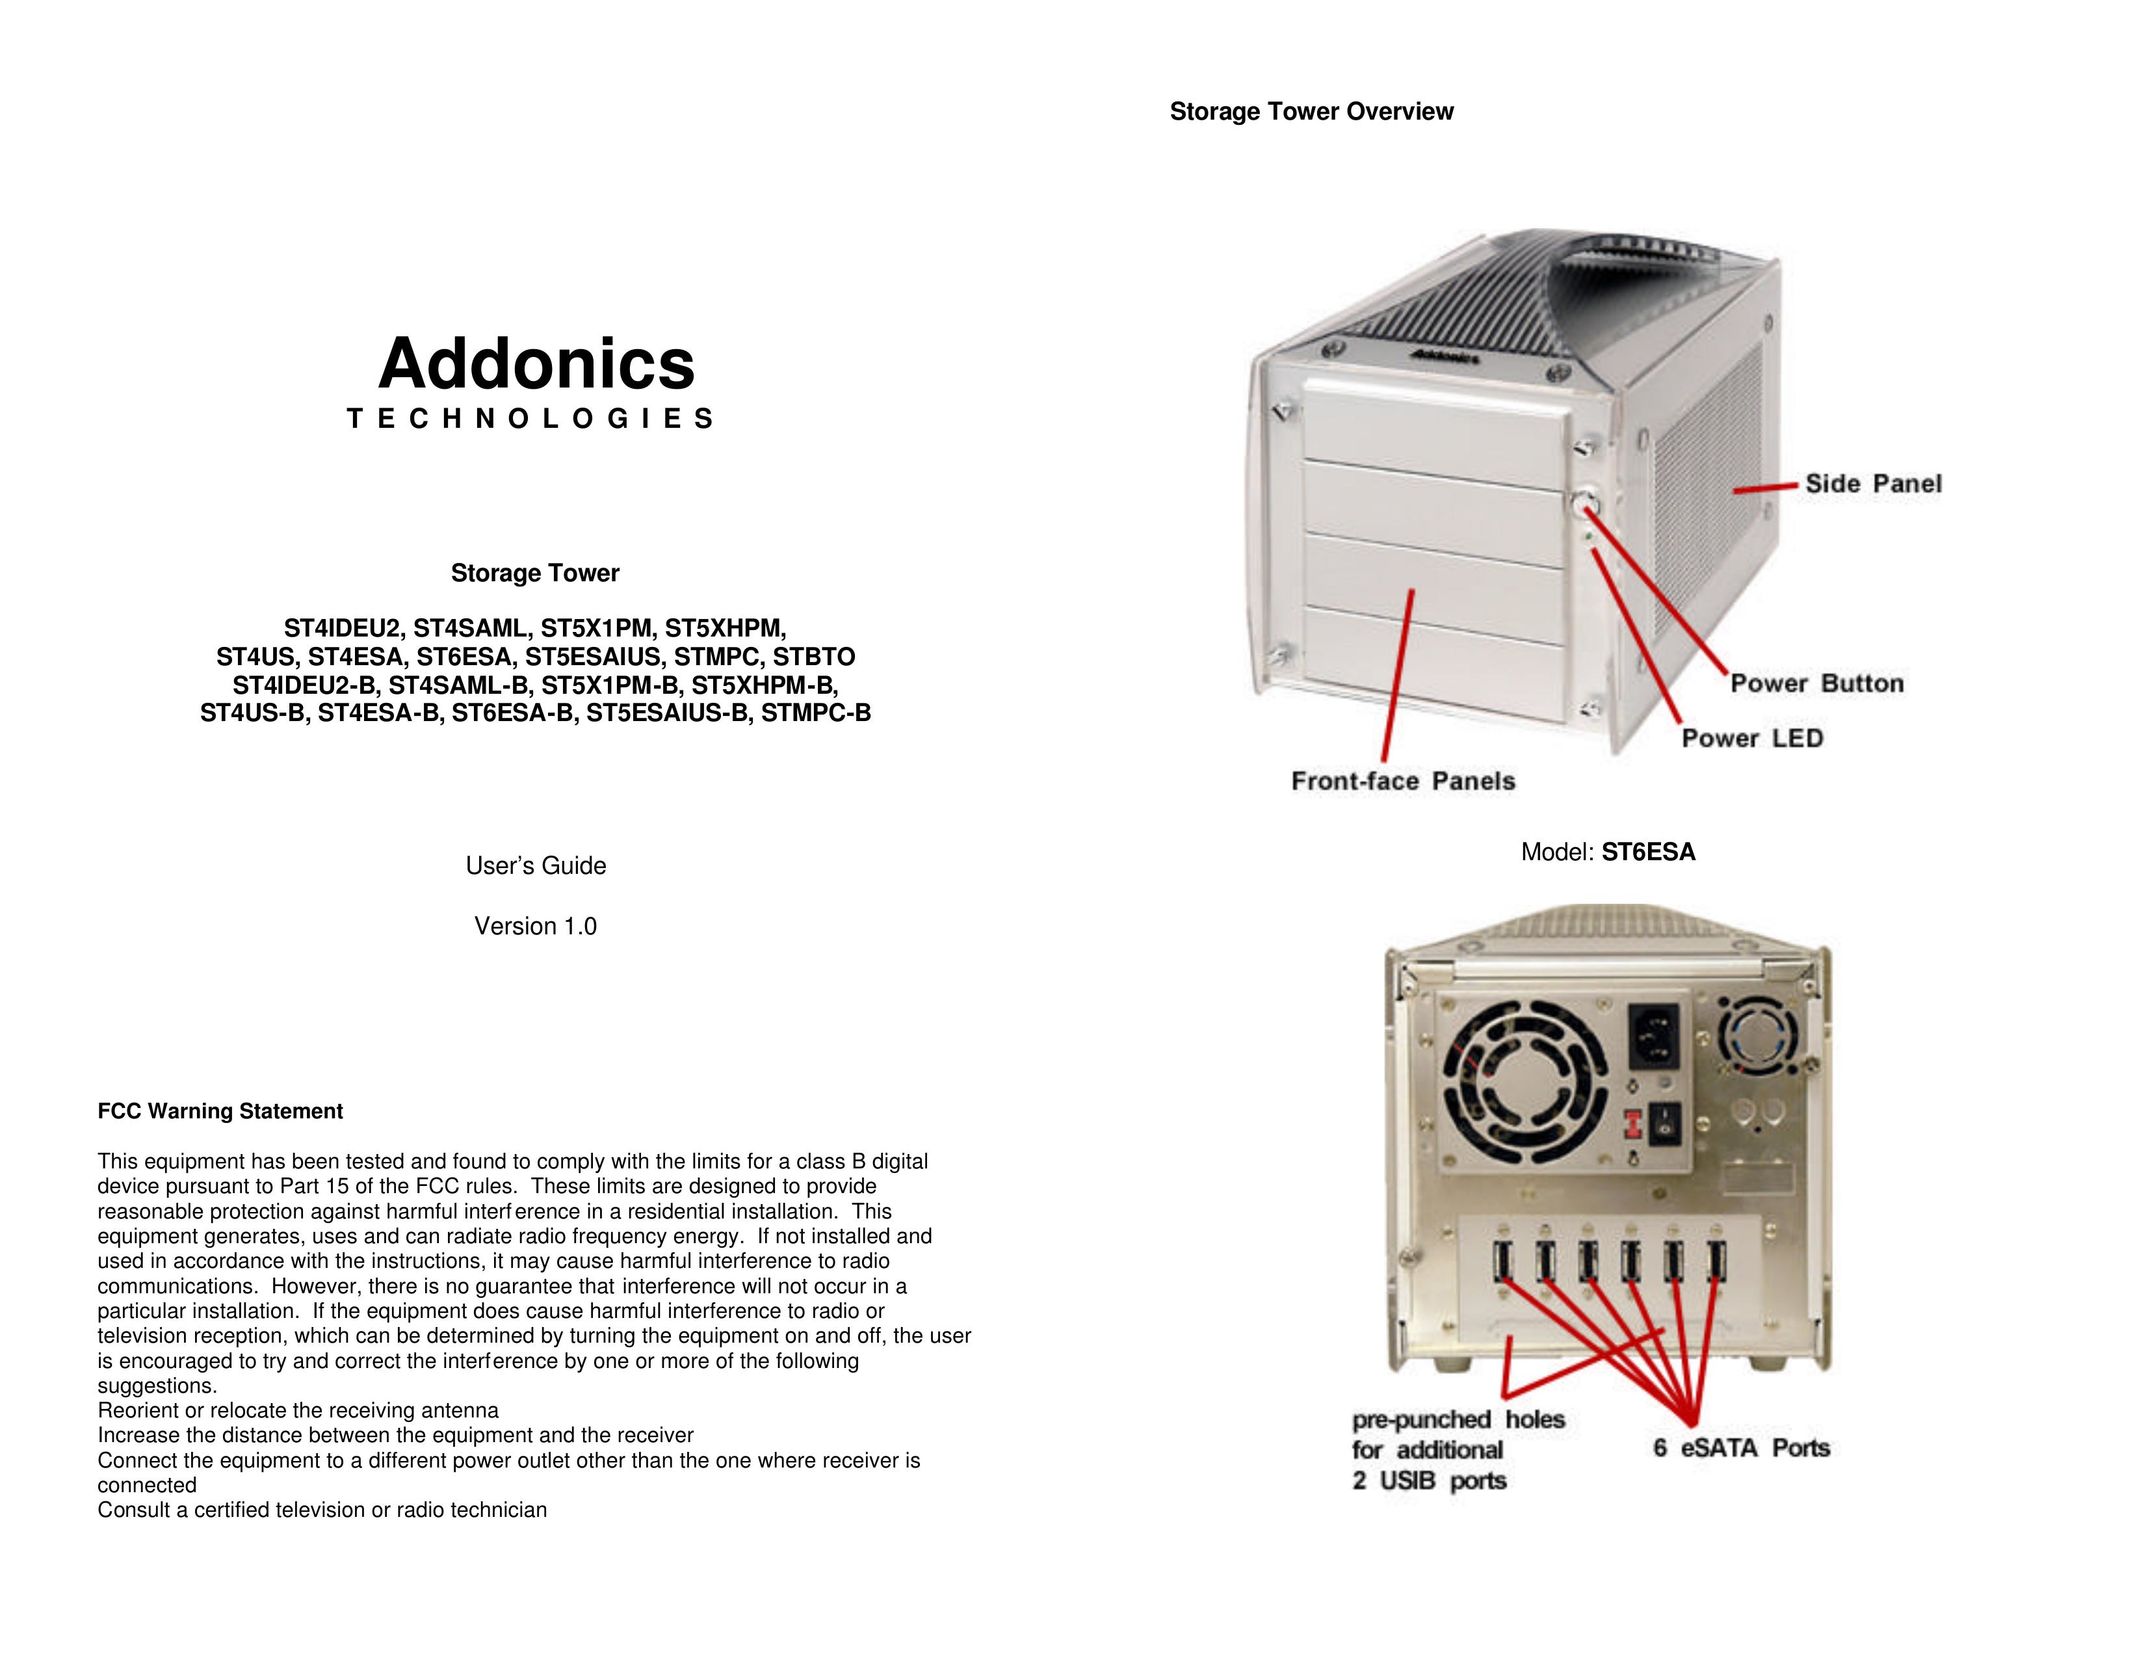 Addonics Technologies ST4US Portable Media Storage User Manual